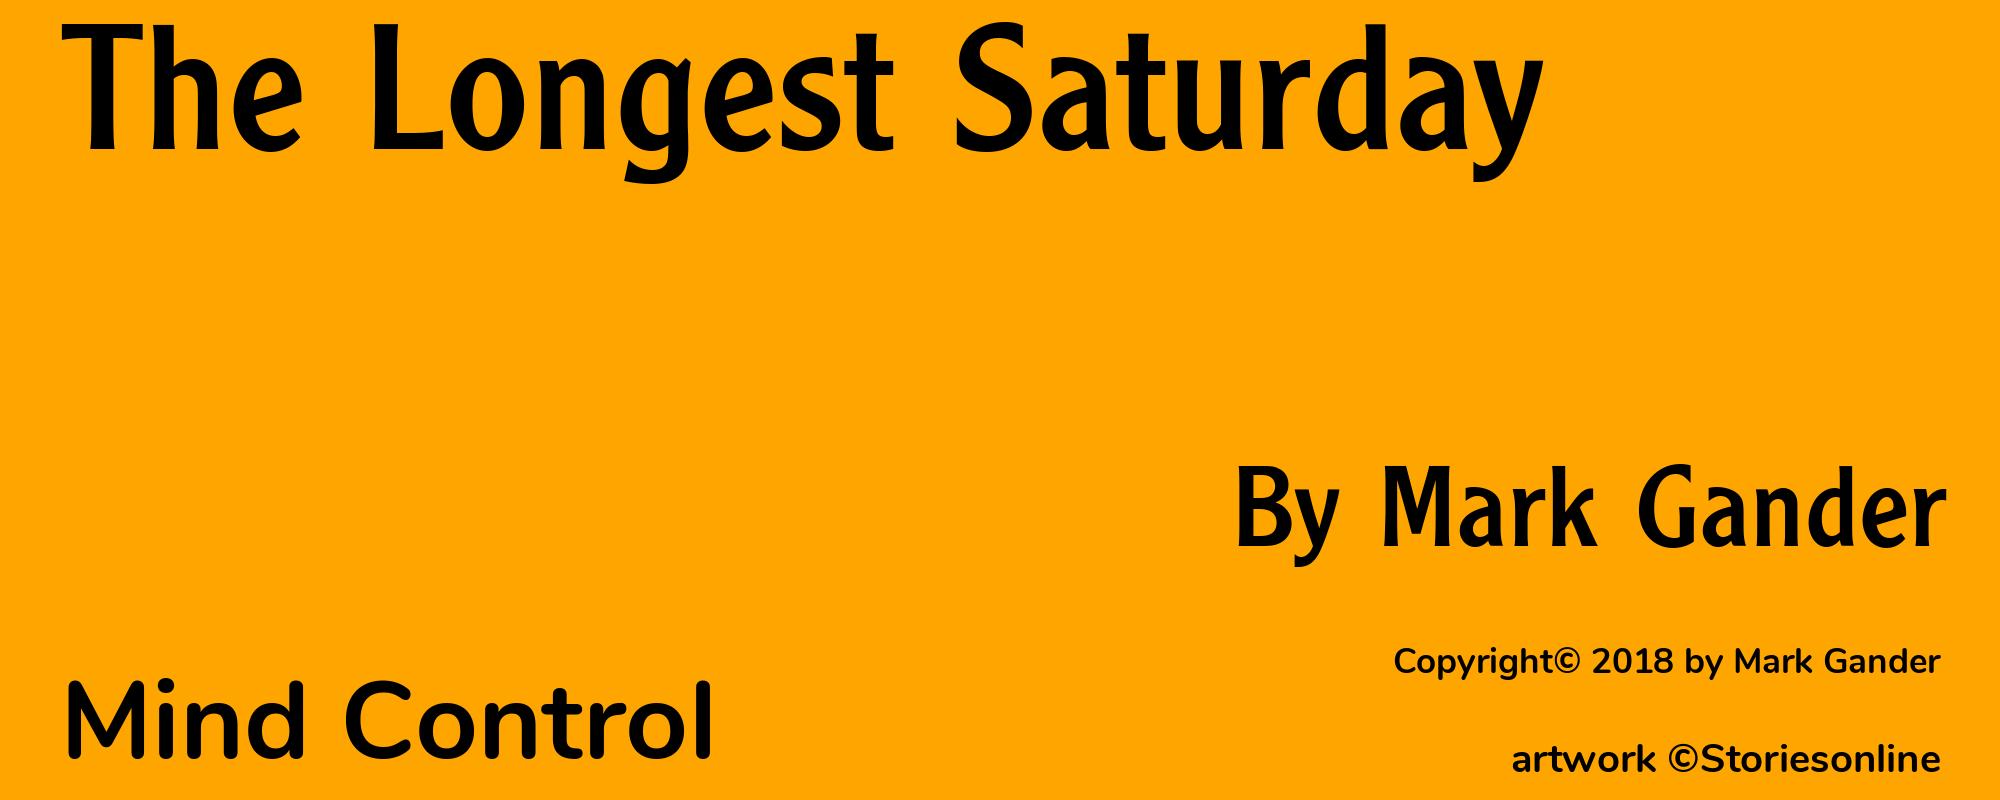 The Longest Saturday - Cover